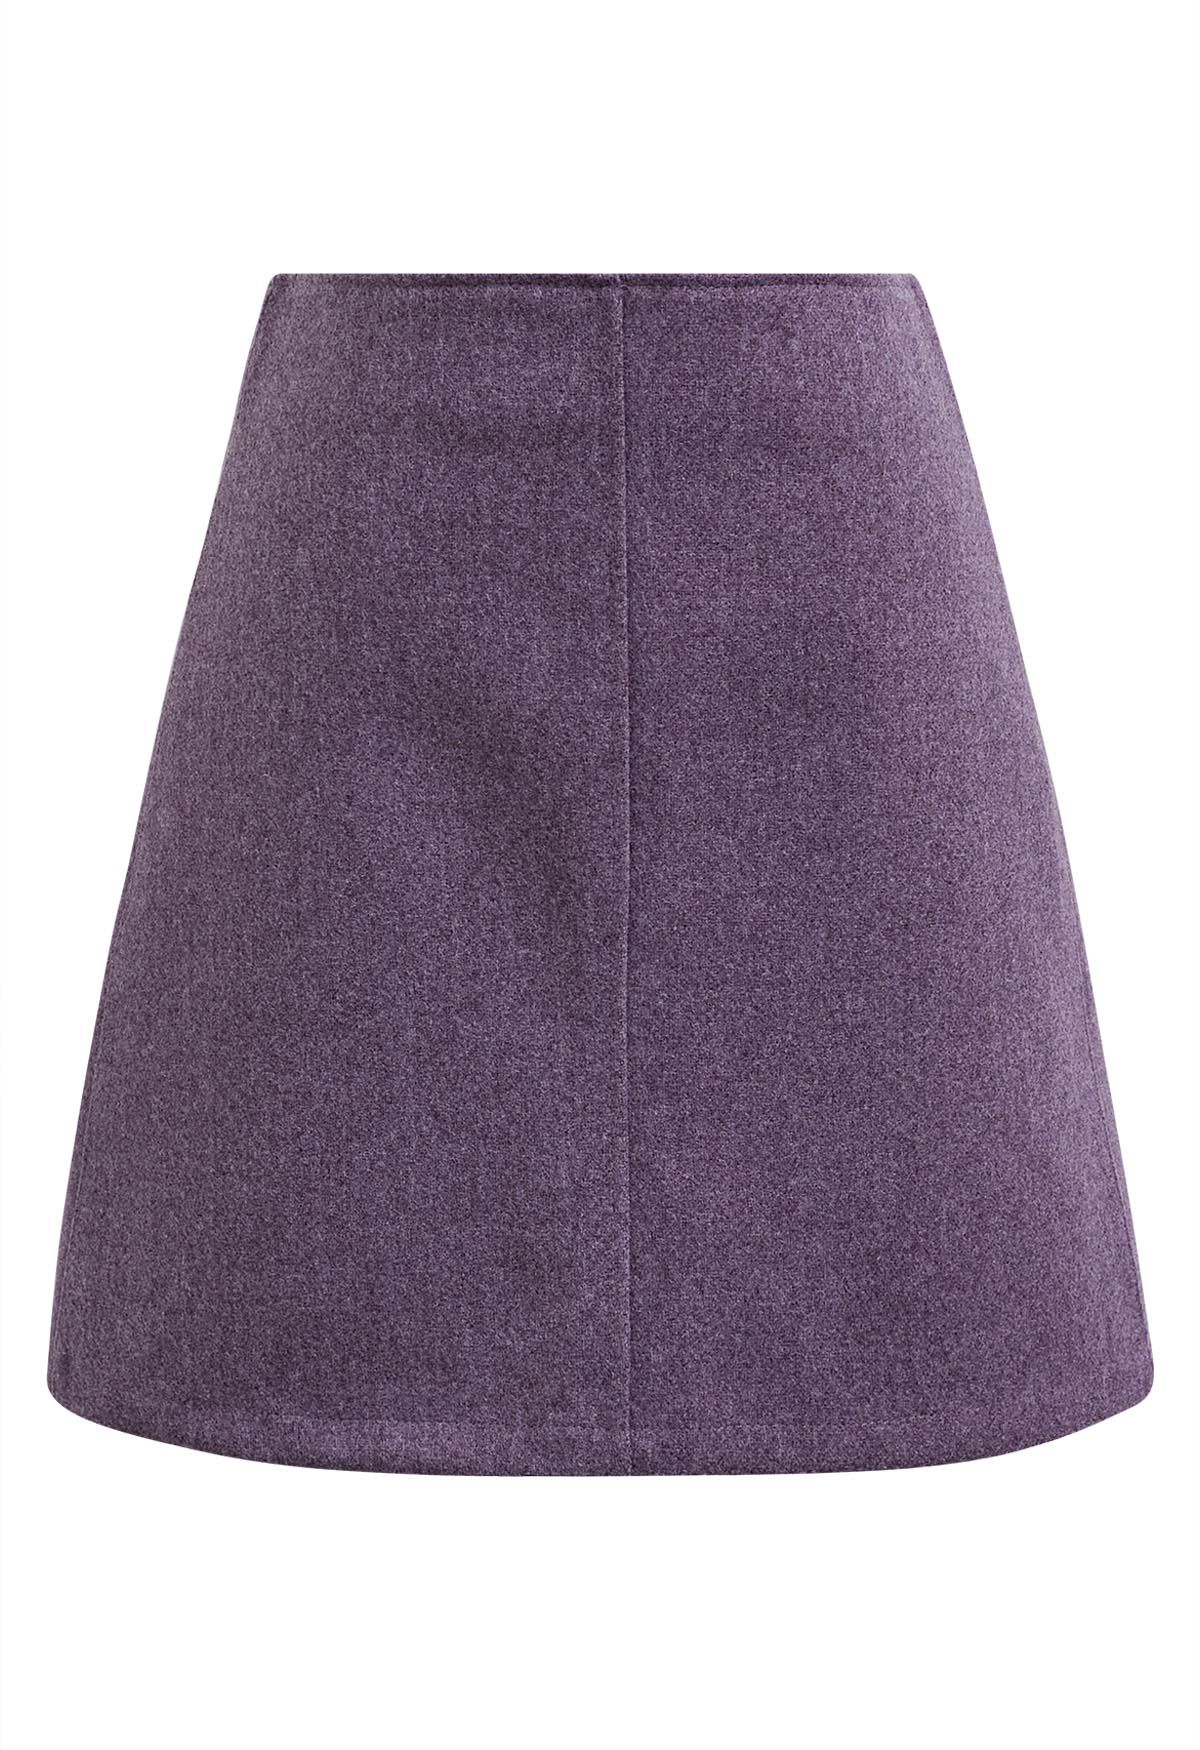 Elegante minifalda con costura central